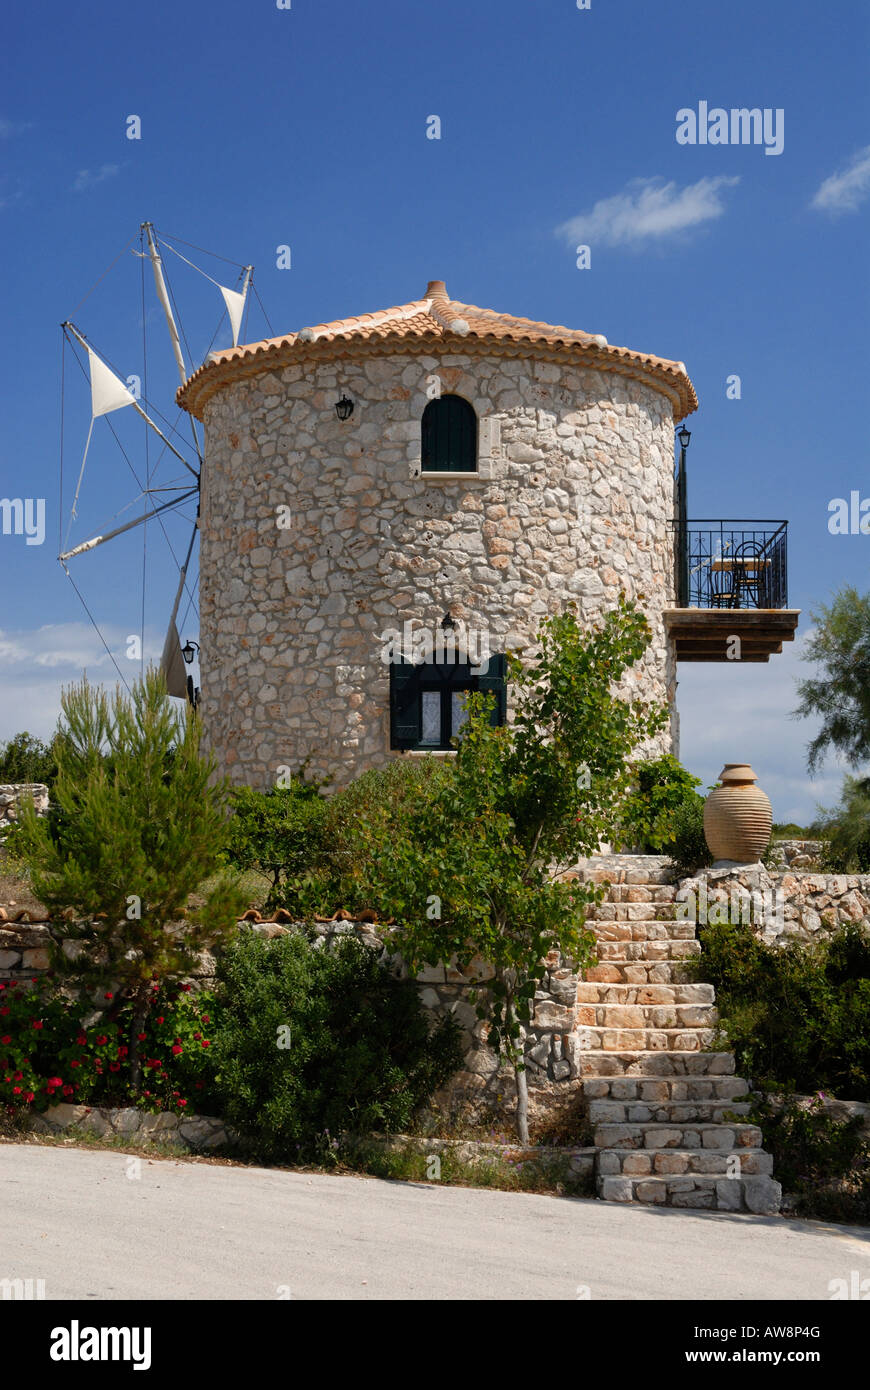 'Anemomilos House' an old stone windmill in Cape Skinari, north end of the Zante/ Zakynthos island, Greece Stock Photo